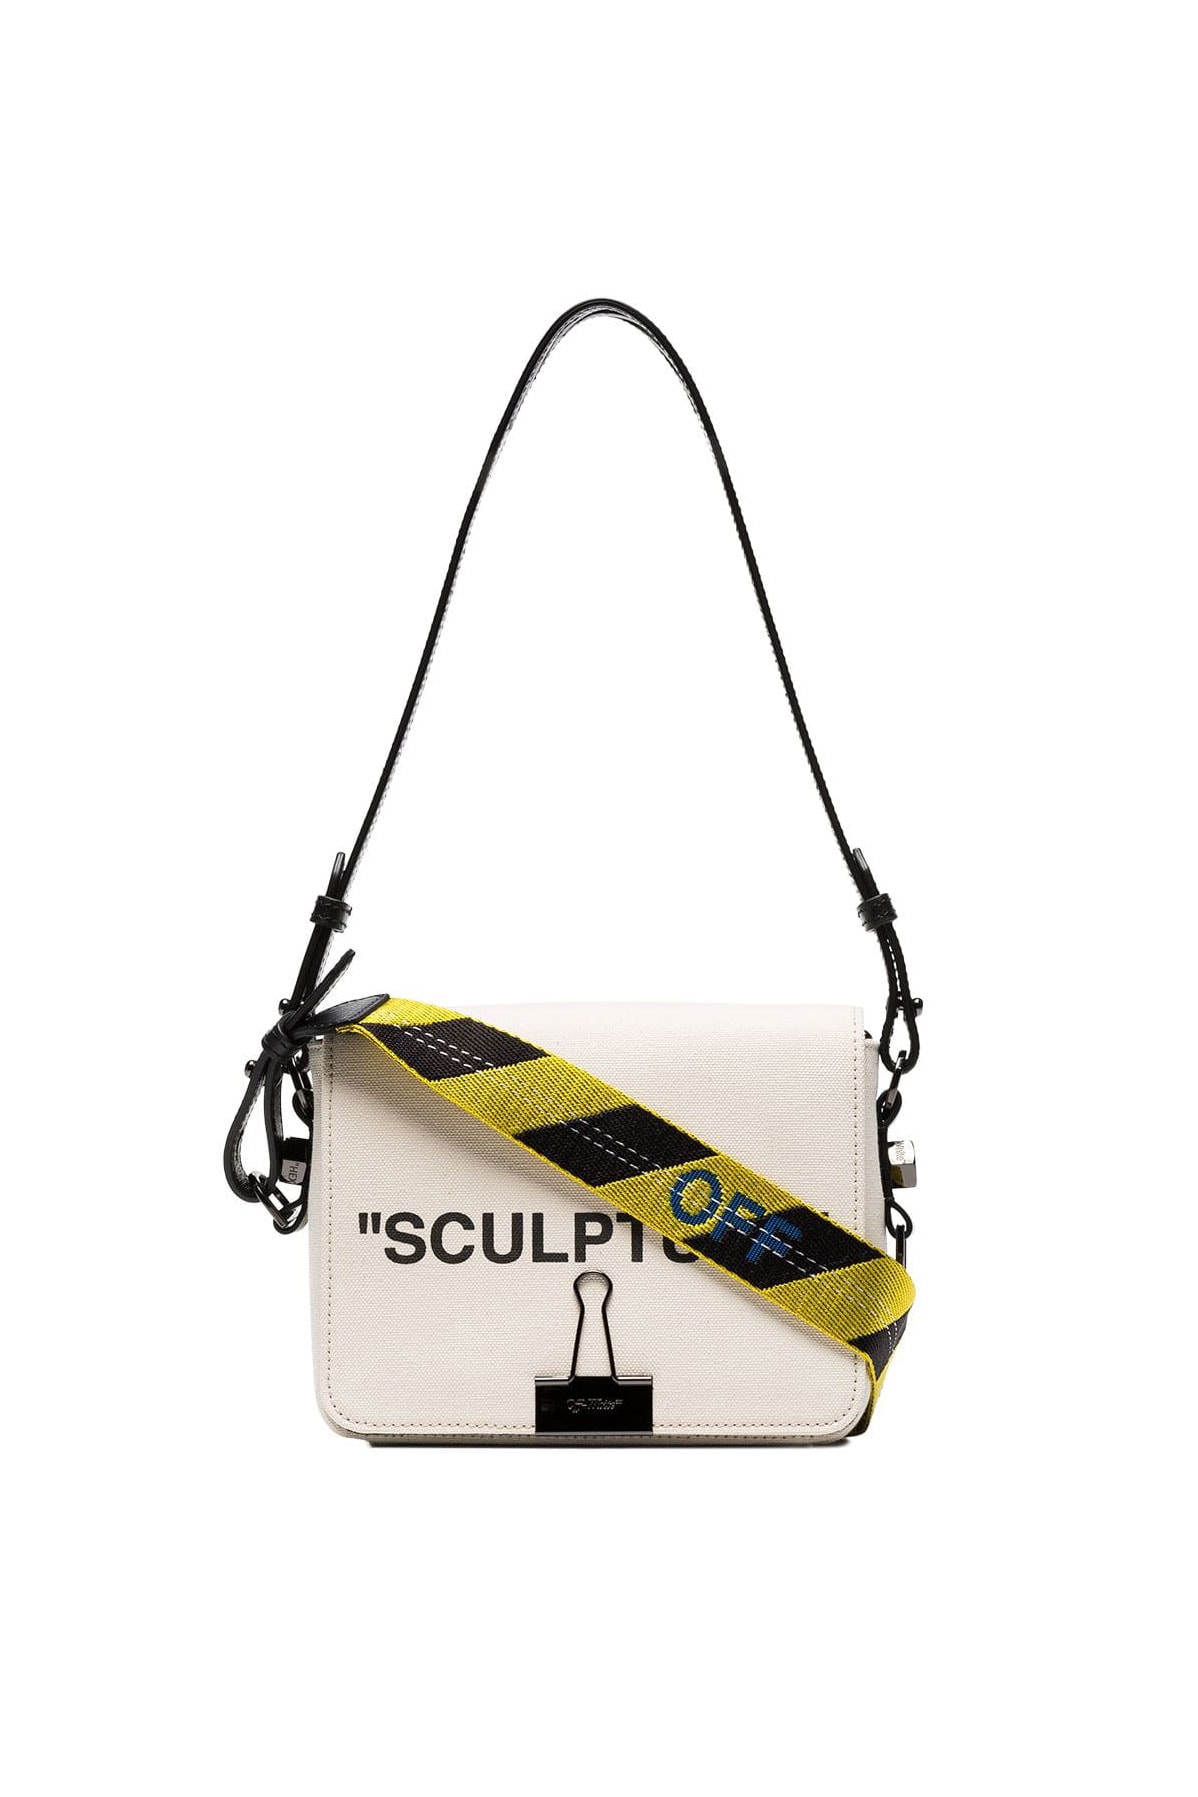 Off-White's SCULPTURE Bag in Cream Color | Hypebae